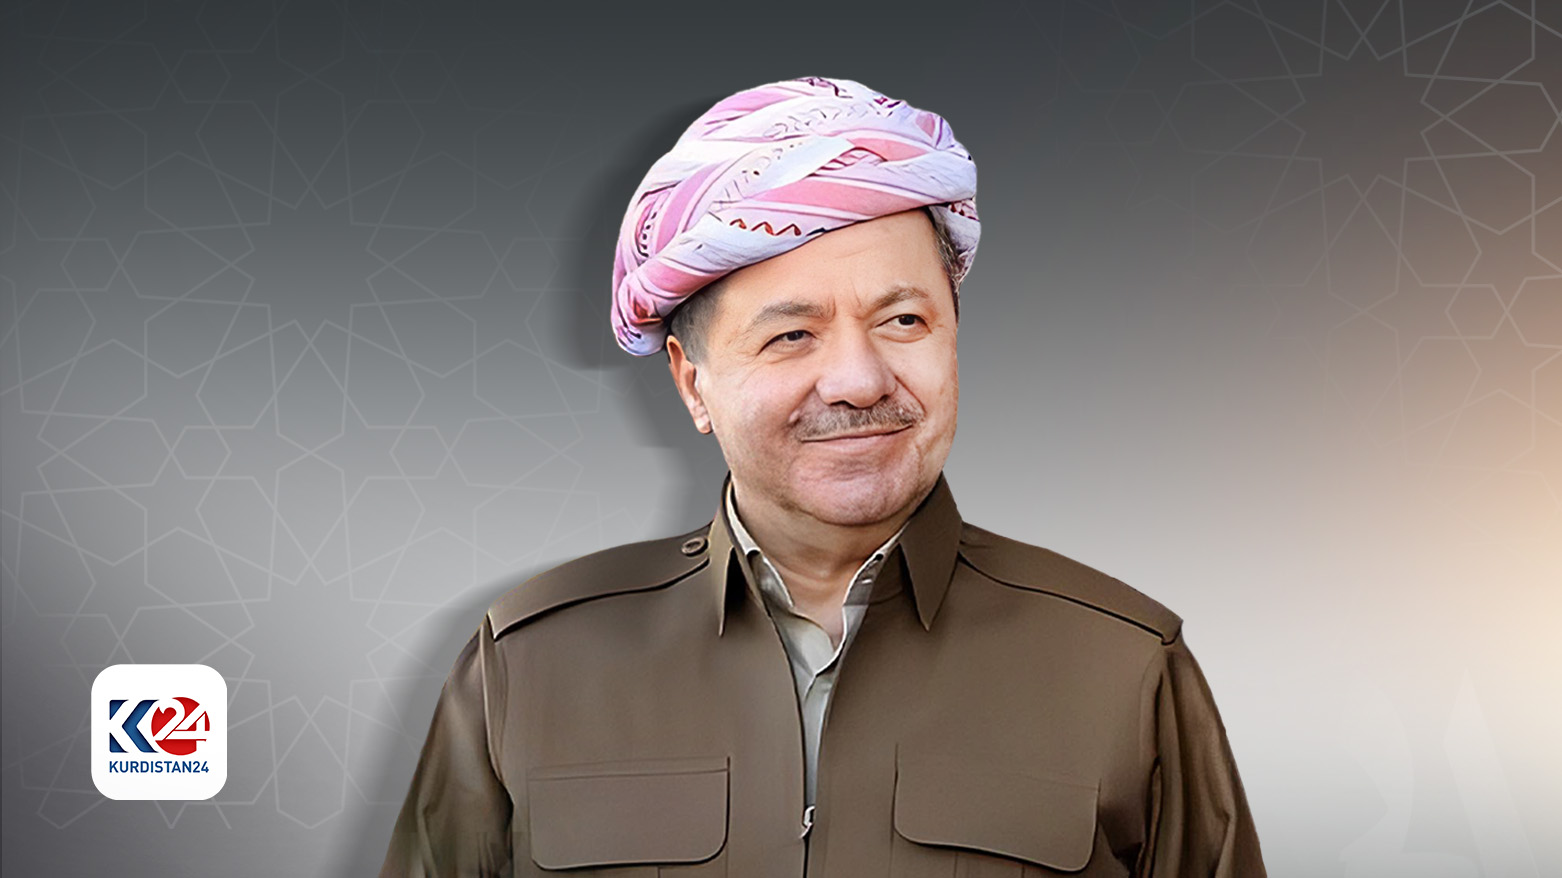 KDP President Masoud Barzani congratulates Muslims on Eid alAdha